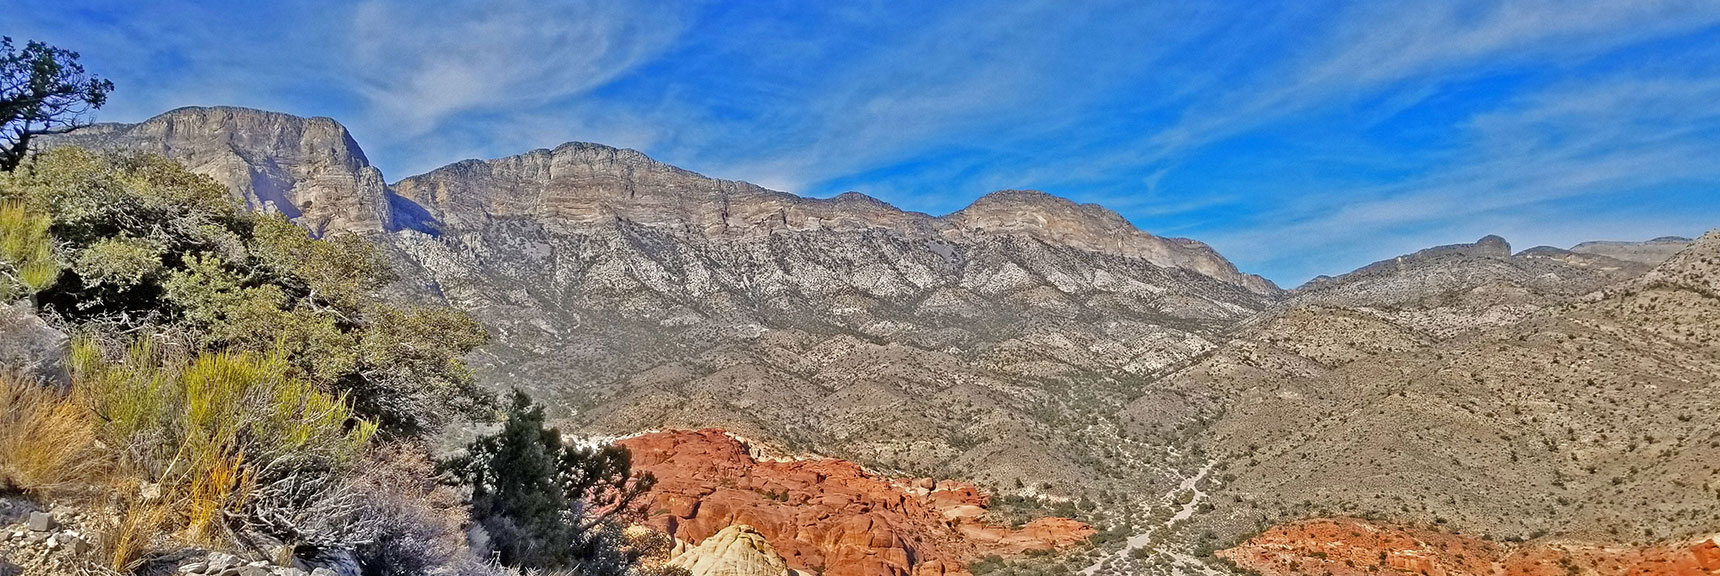 At 800ft Below Turtlehead Peak Summit El Padre and La Madre Mountains Appear. | Kraft Mountain, Gateway Canyon Loop, Calico Basin, Nevada